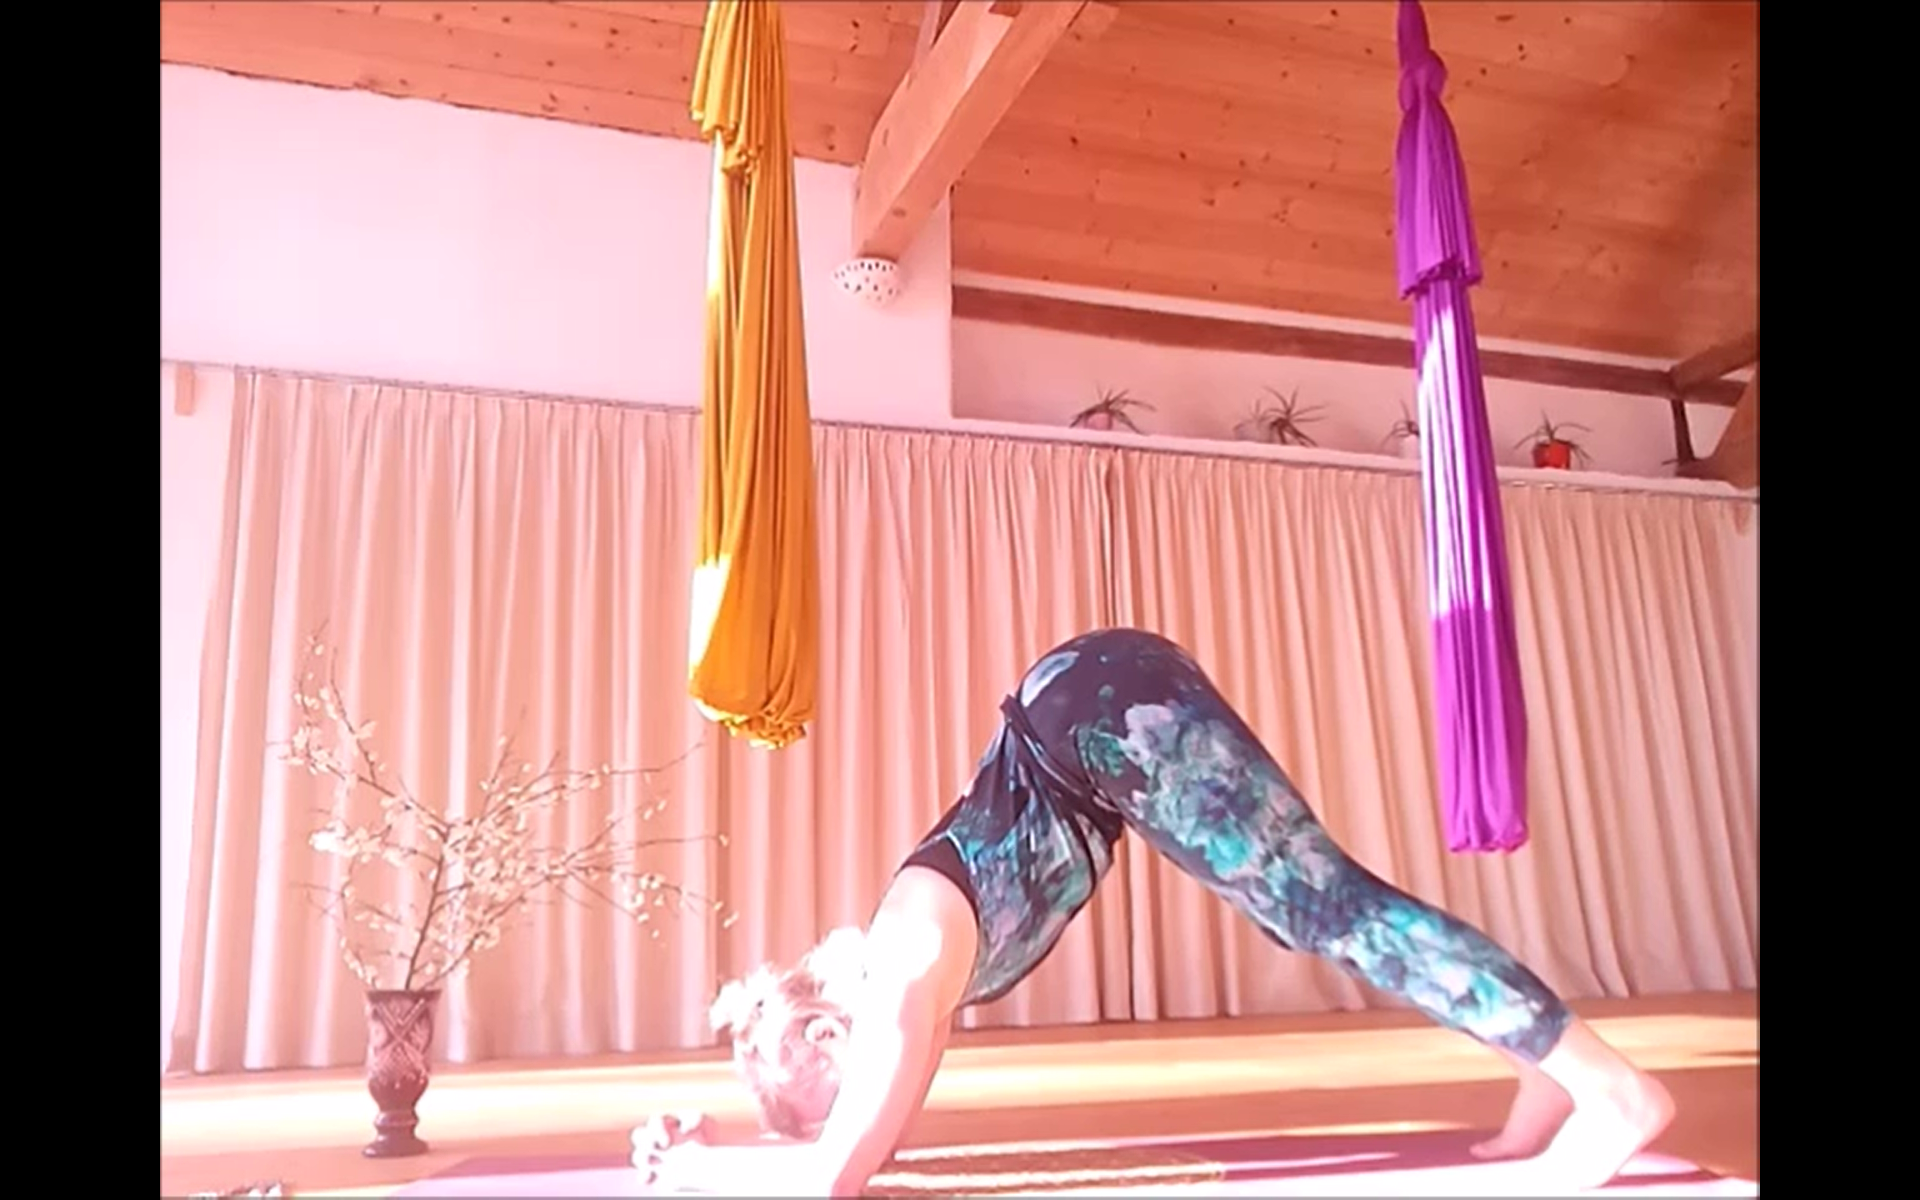 Yoga4